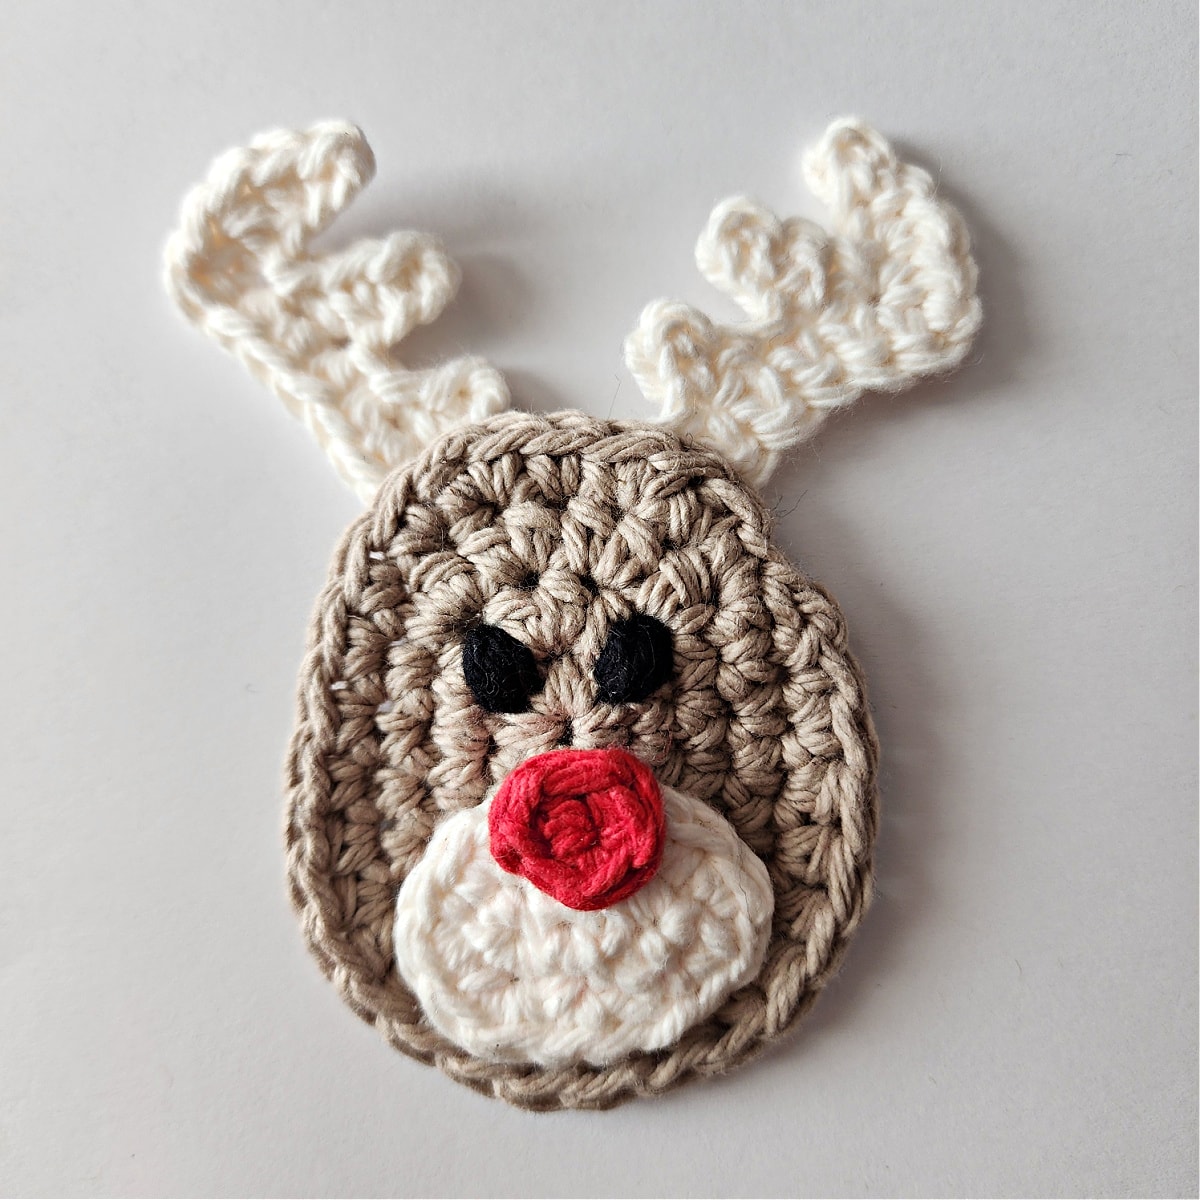 crochet reindeer ornament tutorial for adding face